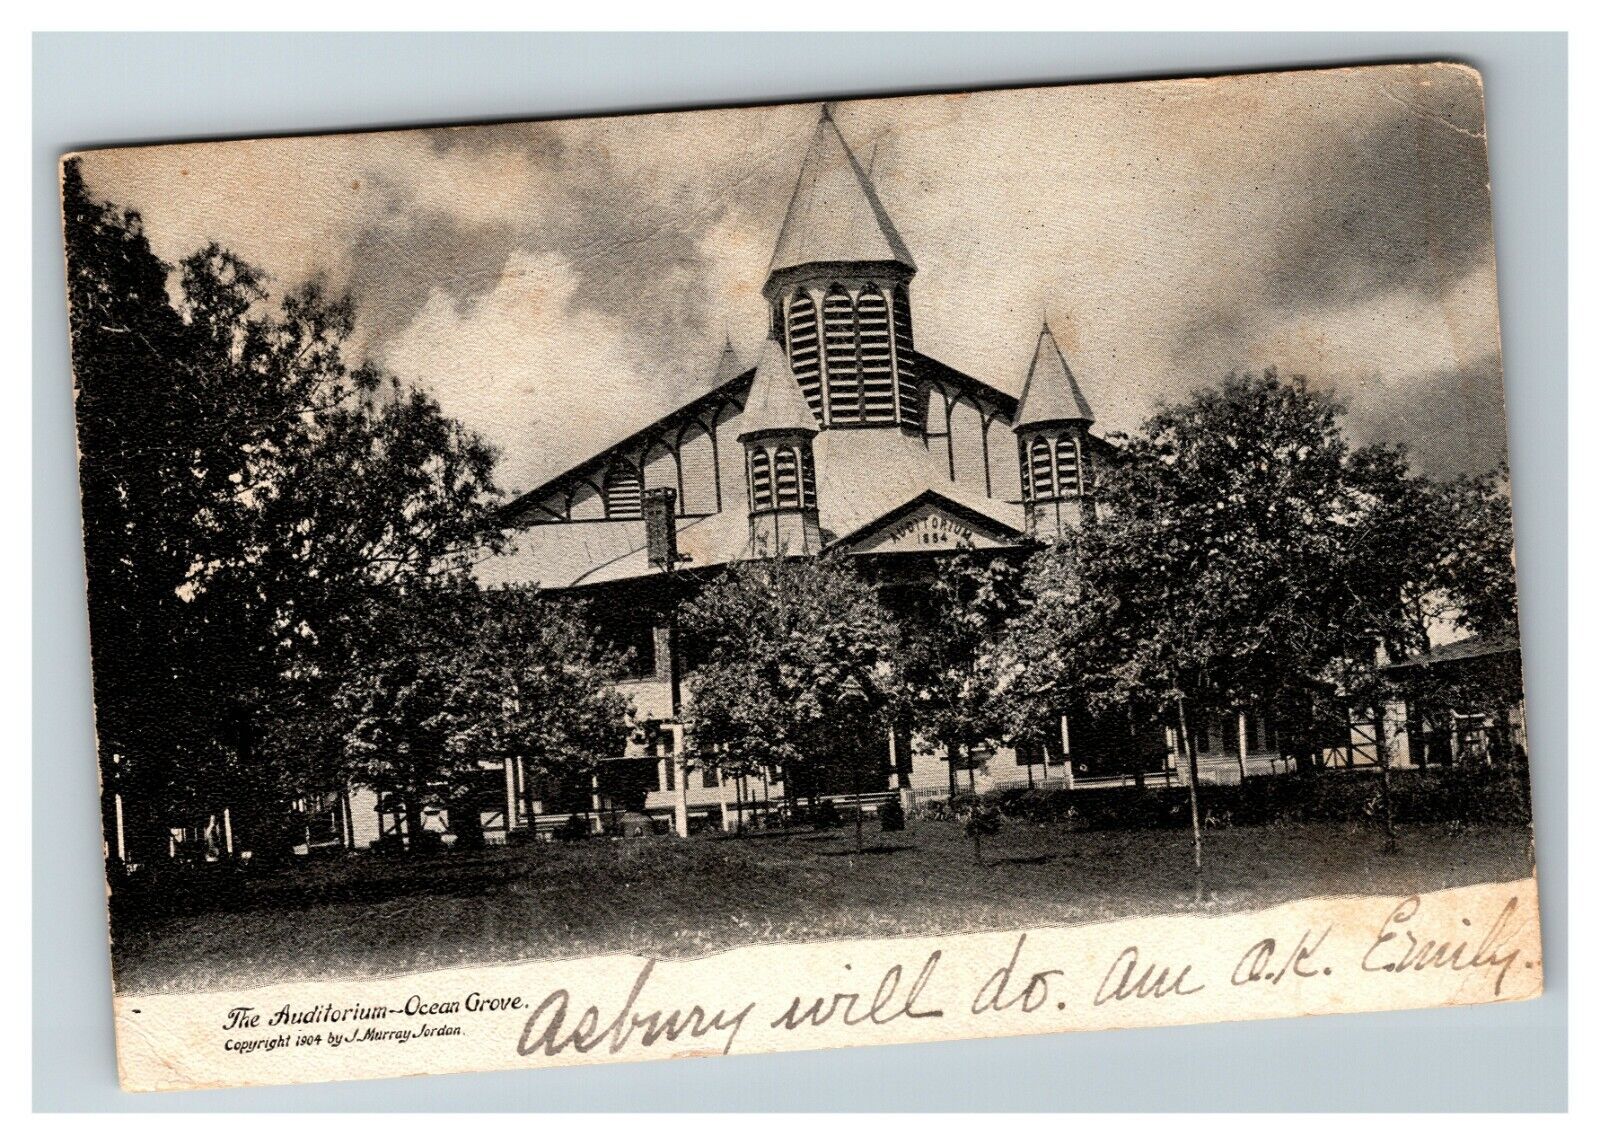 The Auditorium, Ocean Grove NJ c1905 Vintage Postcard